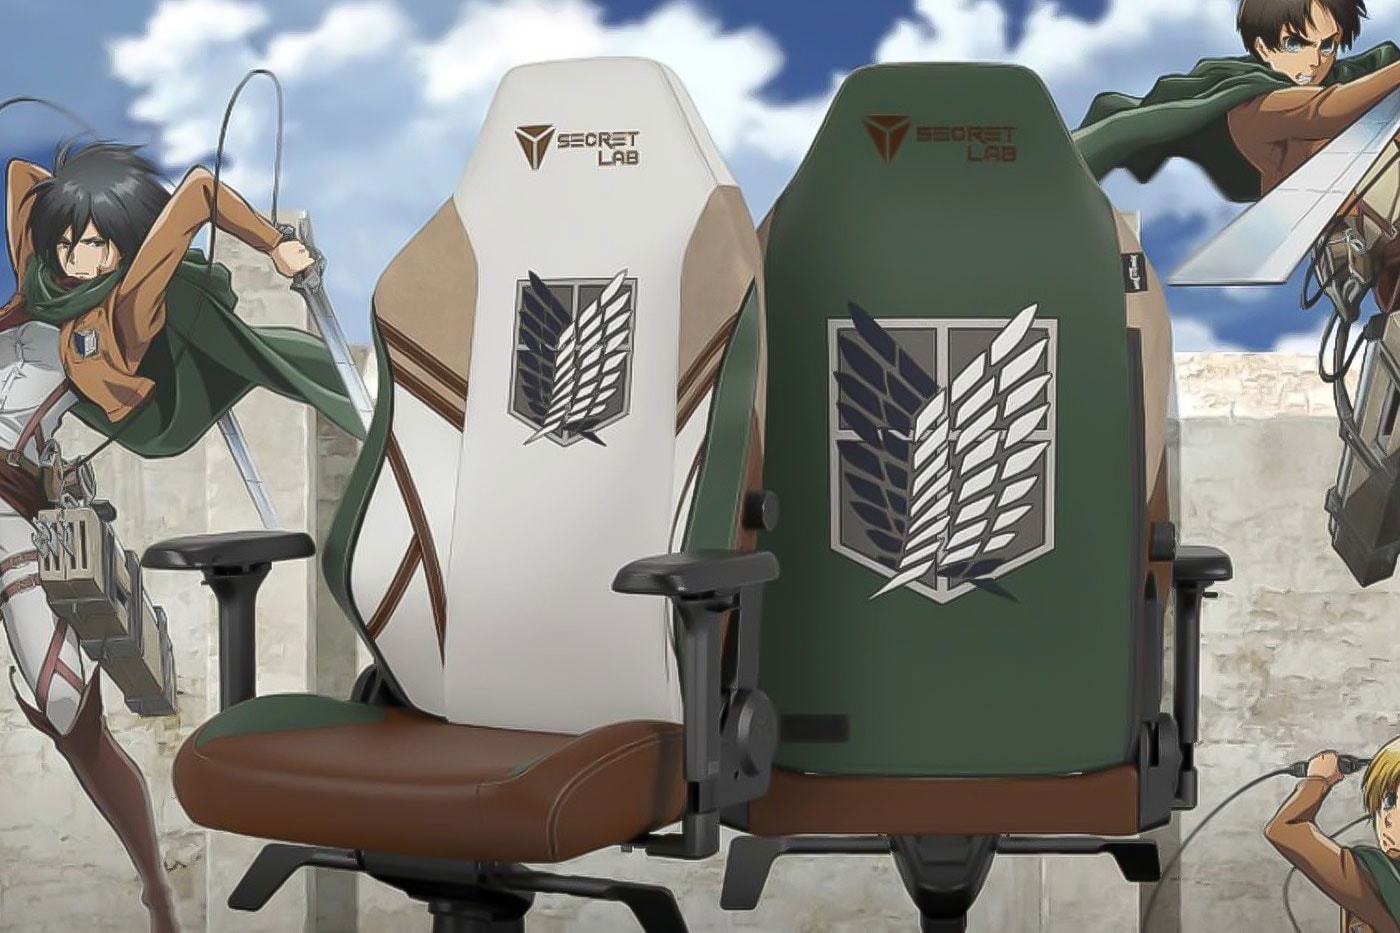 Secretlab 攜手人氣動畫《進擊的巨人》打造限量聯乘電競椅